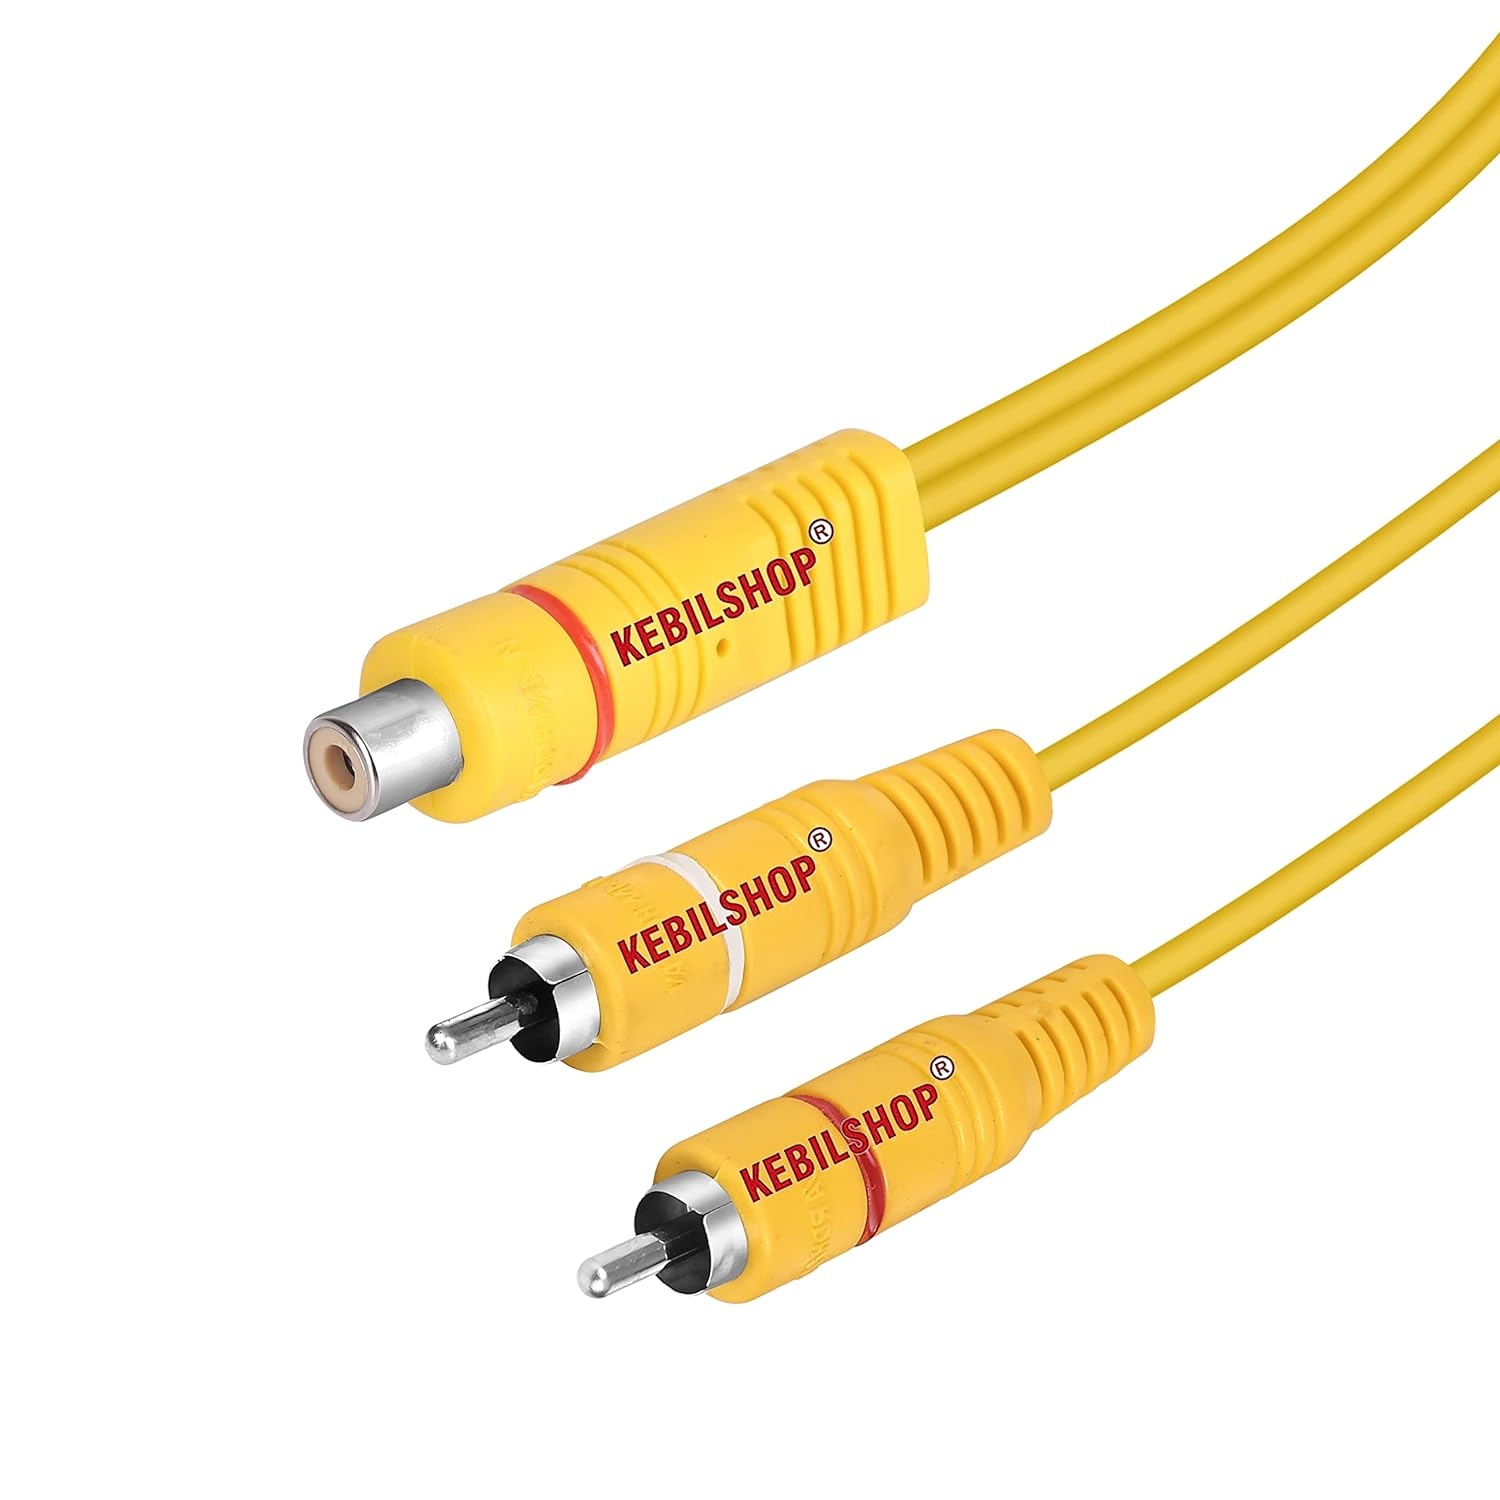 KEBILSHOP 2 RCA Male Jack To 1 RCA Female Plug Splitter AV Adapter Cable for PC, Television, DVD Player